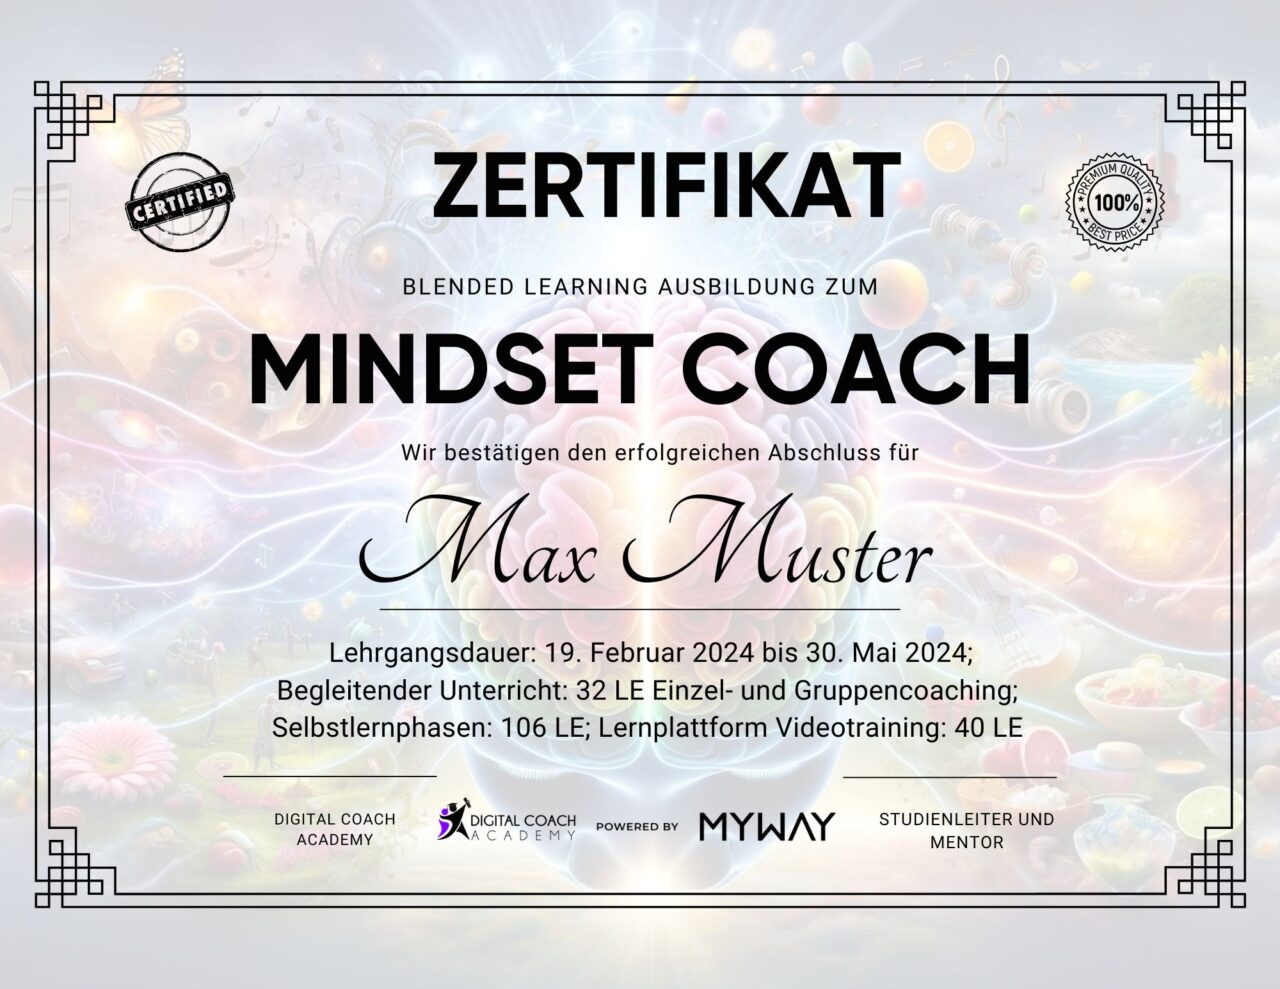 Zertifikat Mindset Coach